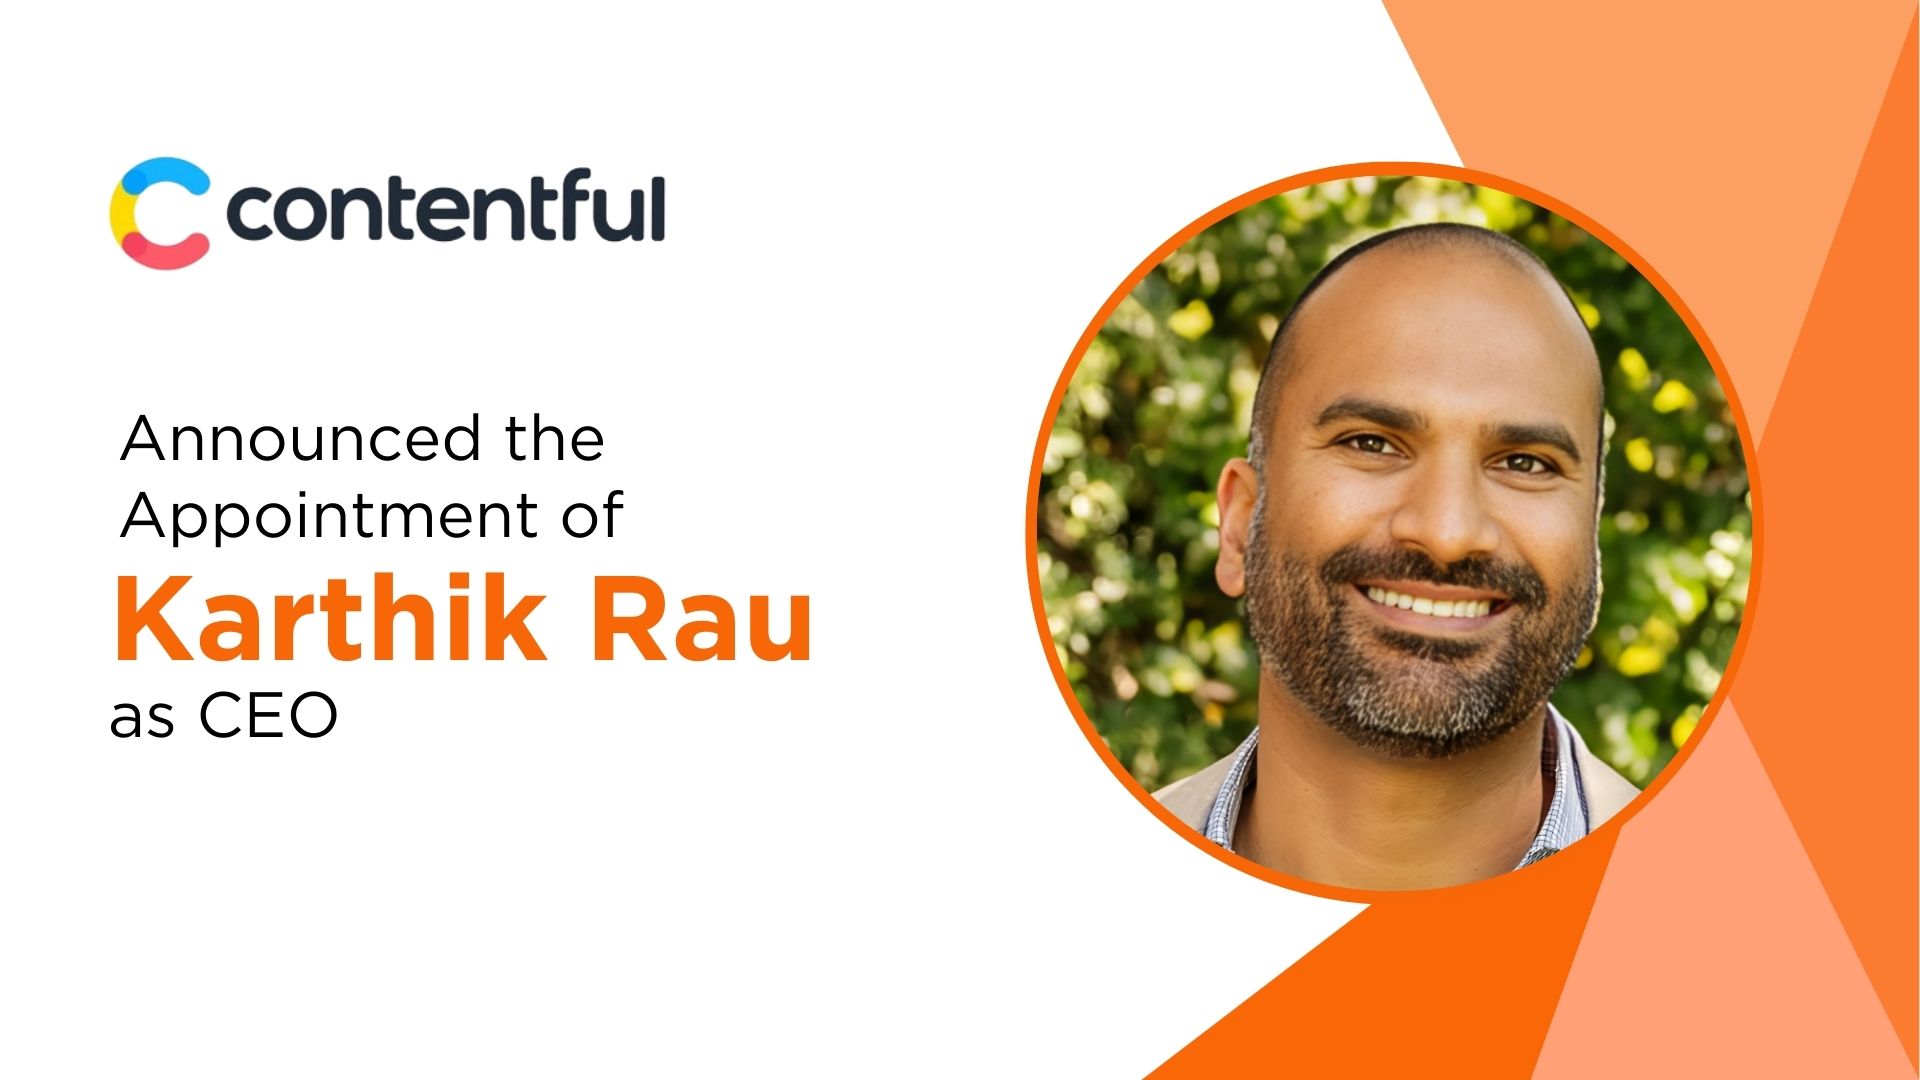 Contentful Welcomes Karthik Rau as New CEO, Succeeding Steve Sloan